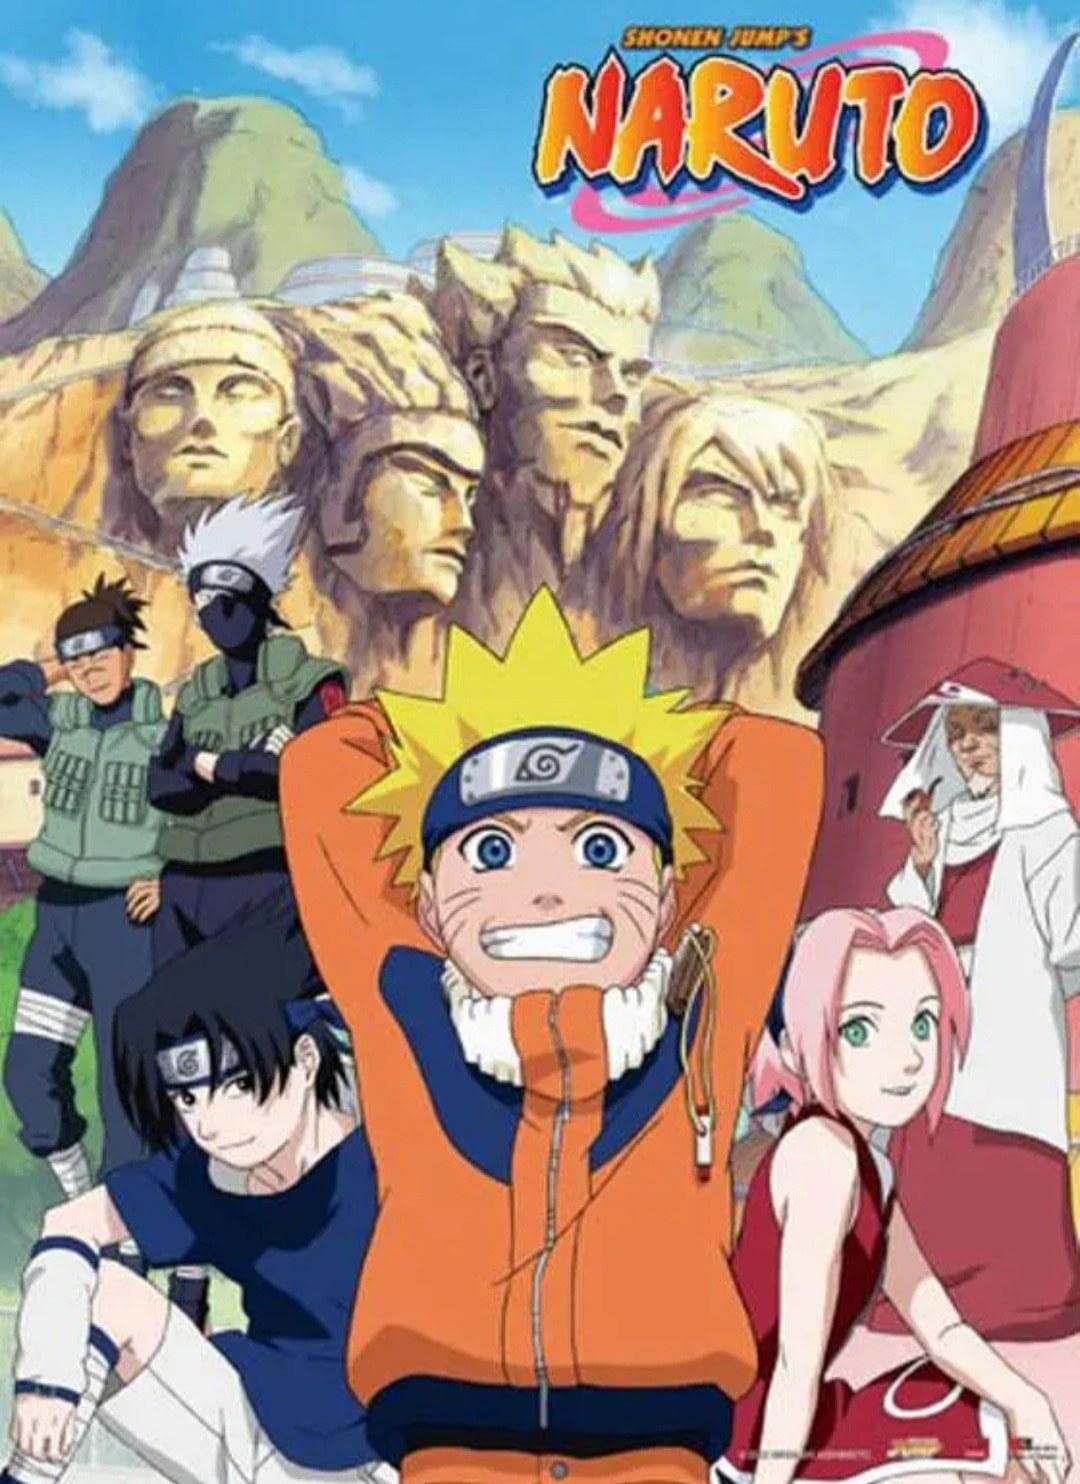 Download Naruto (Season 1-7) (S07E26 ADDED) BluRay Dual Audio {Hindi ORG+English} Complete Anime WEB Series 720p WEB-DL download